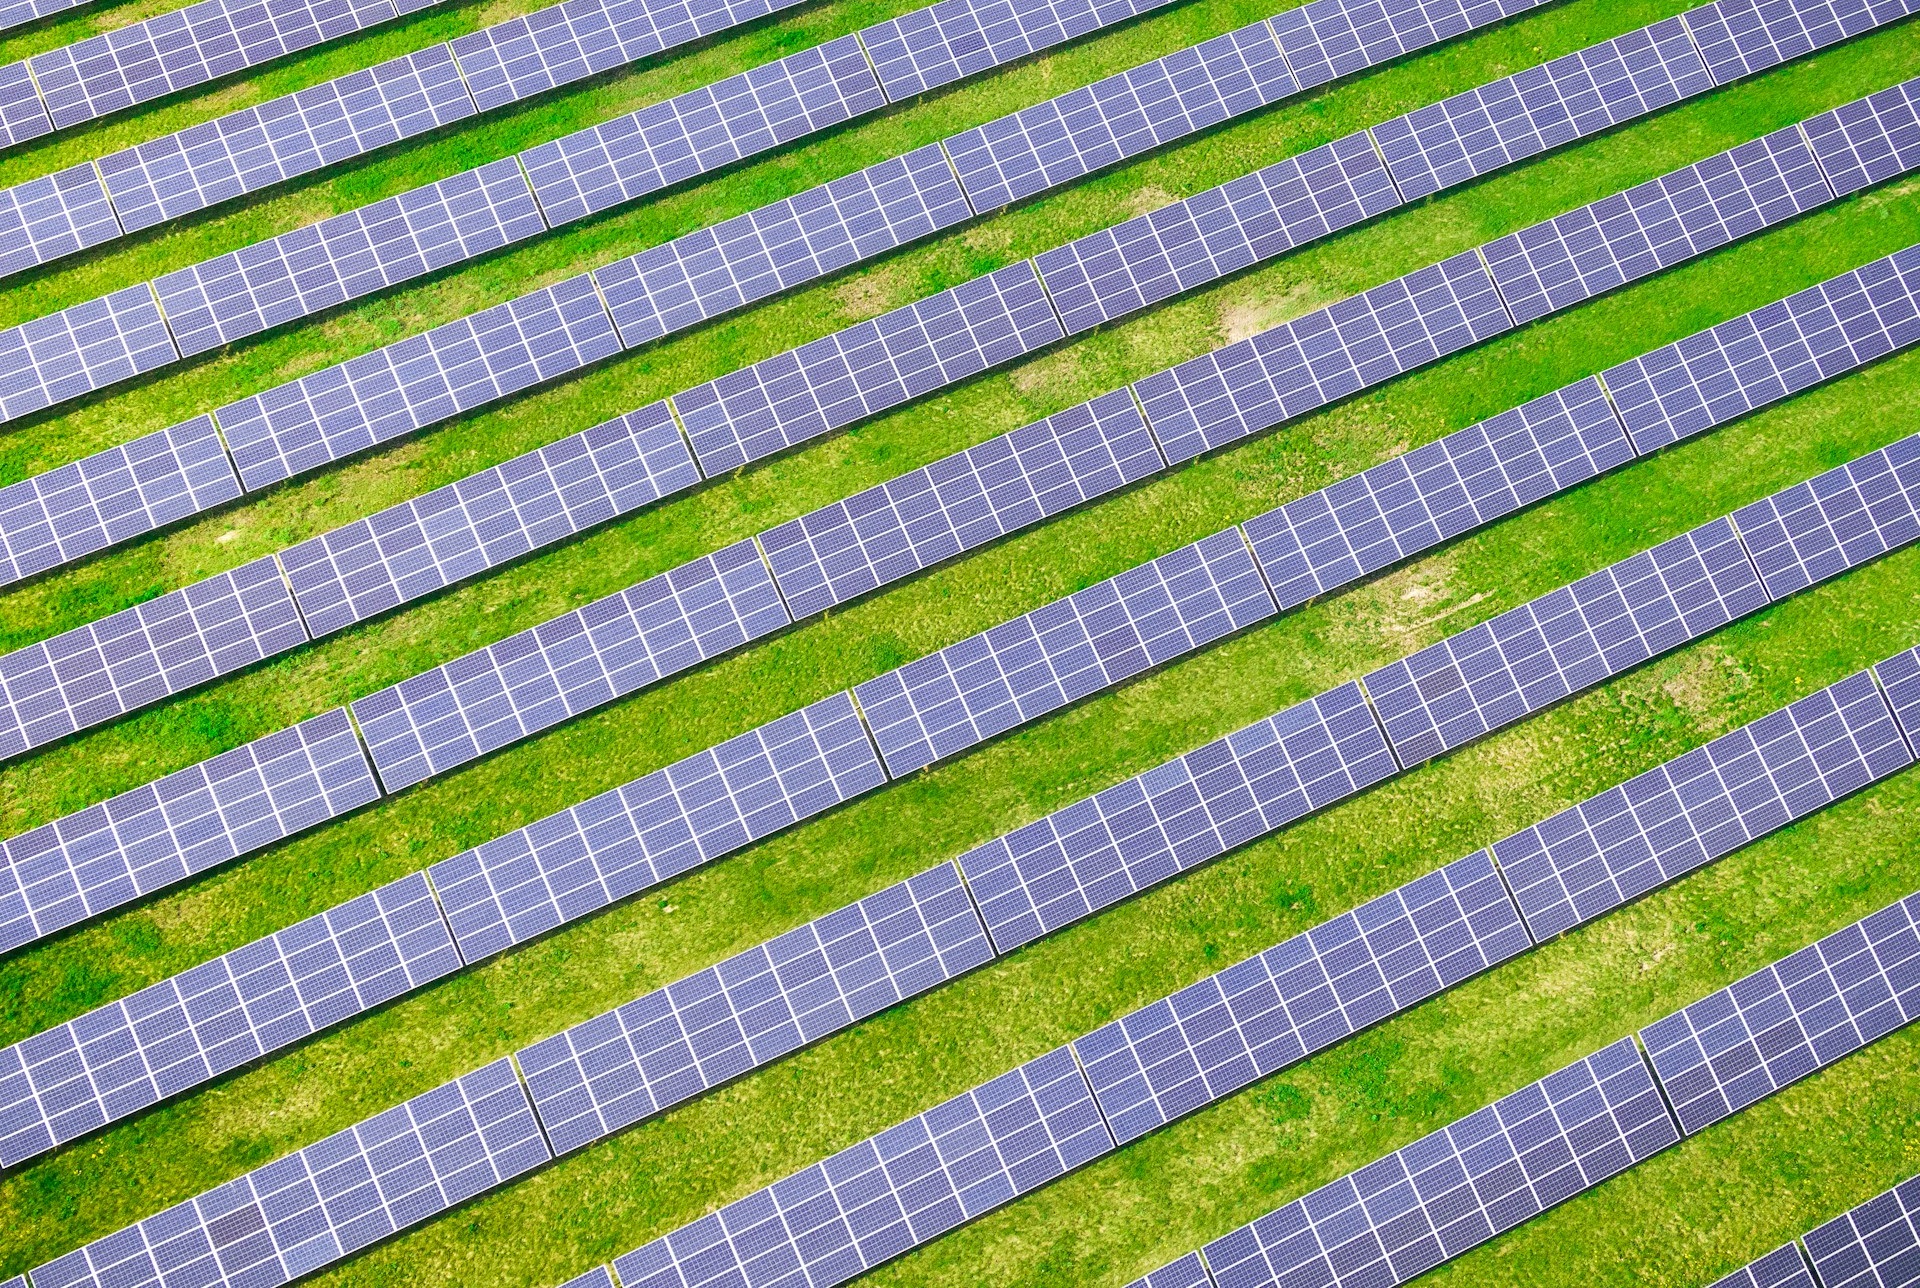 Big Solar Plants on Western Public Land Could Power 7 Million Homes